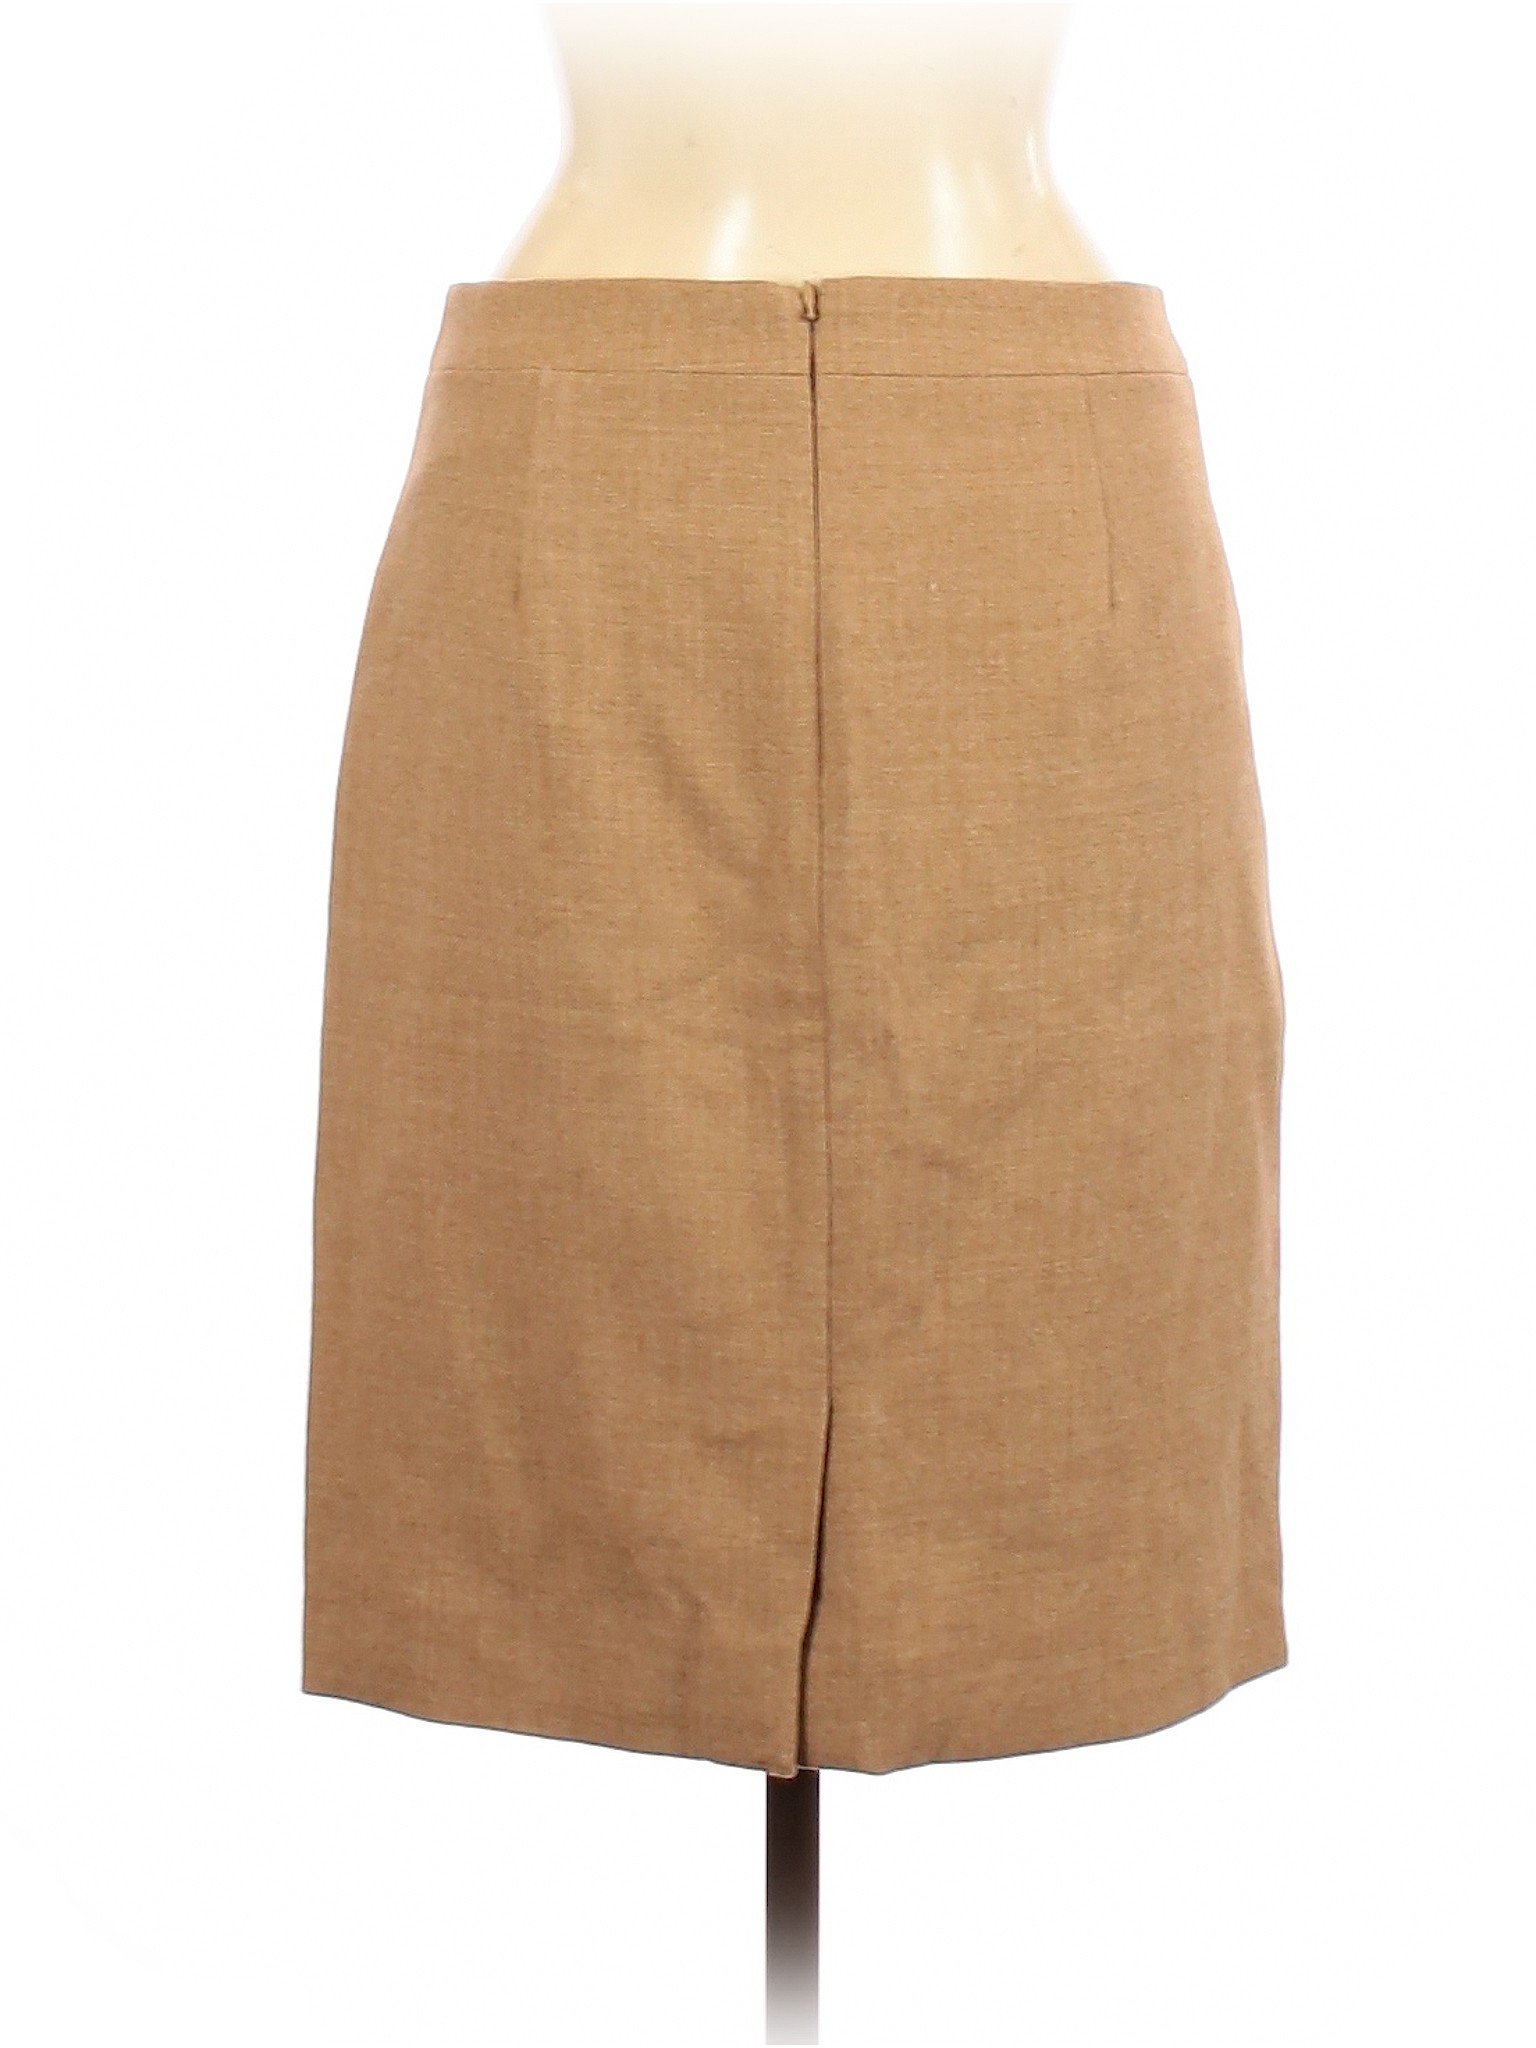 J.Crew Women Brown Wool Skirt 6 Petites | eBay